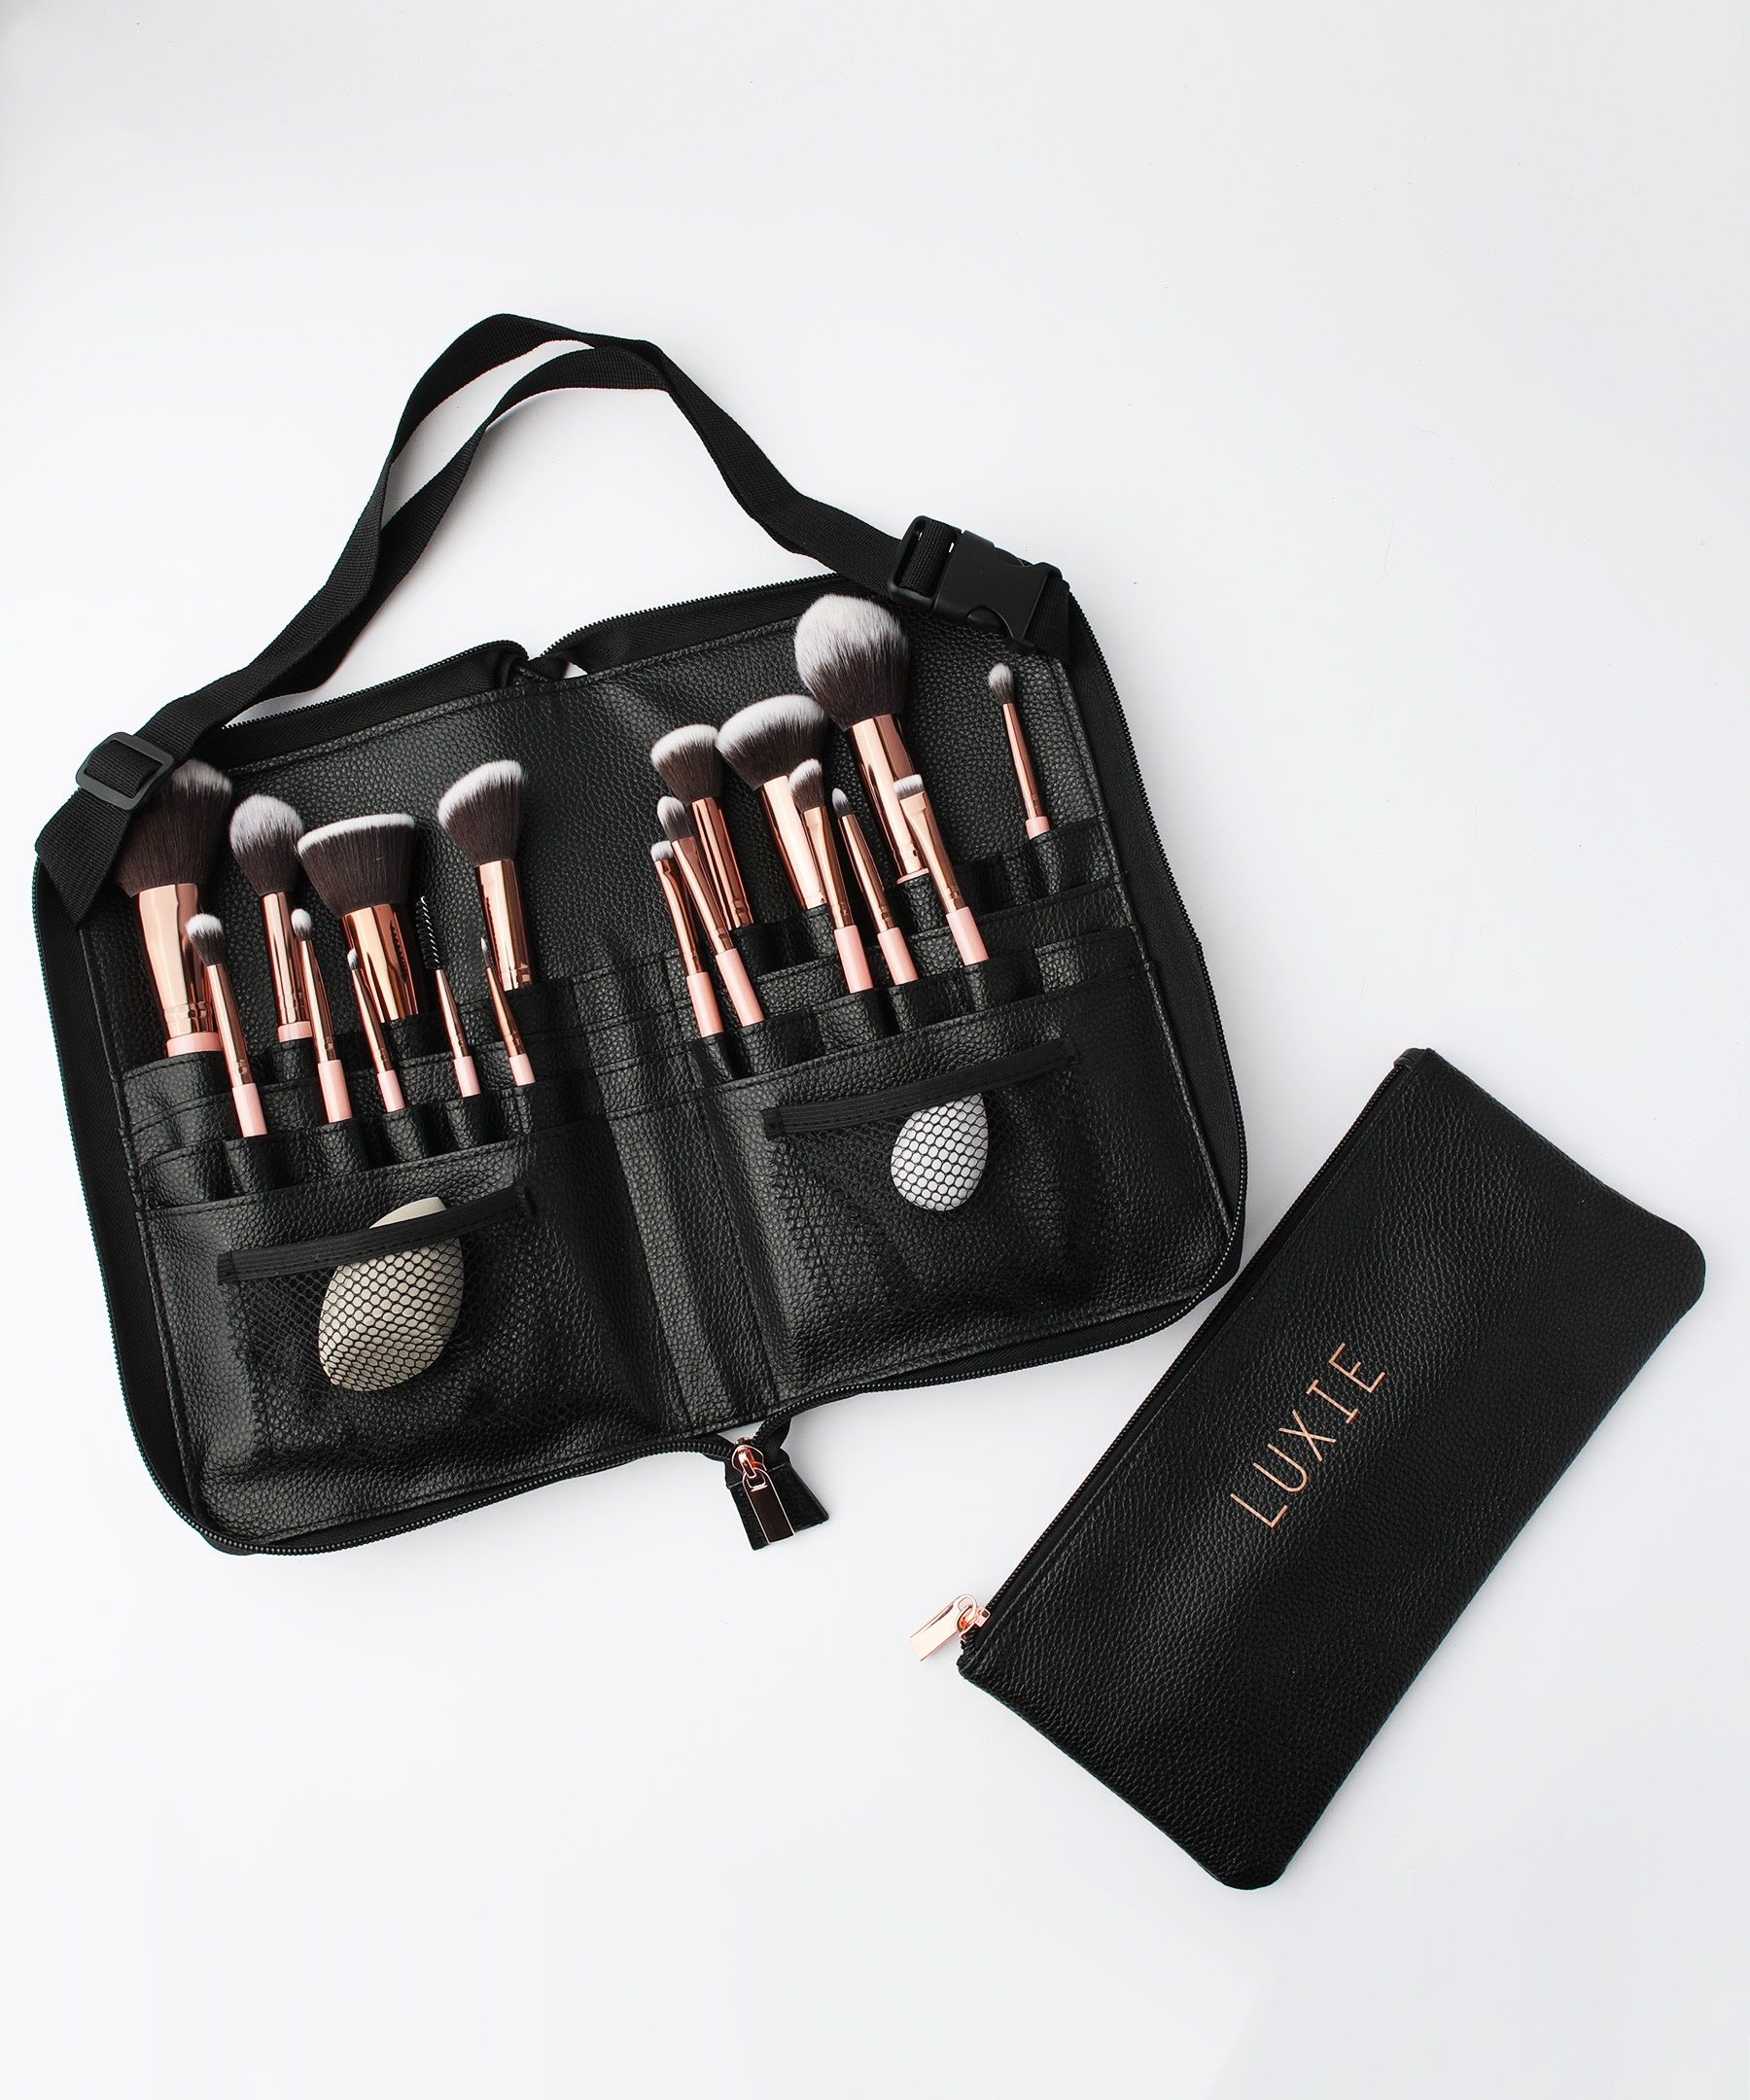 Luxie Beauty Expert Artist Kit